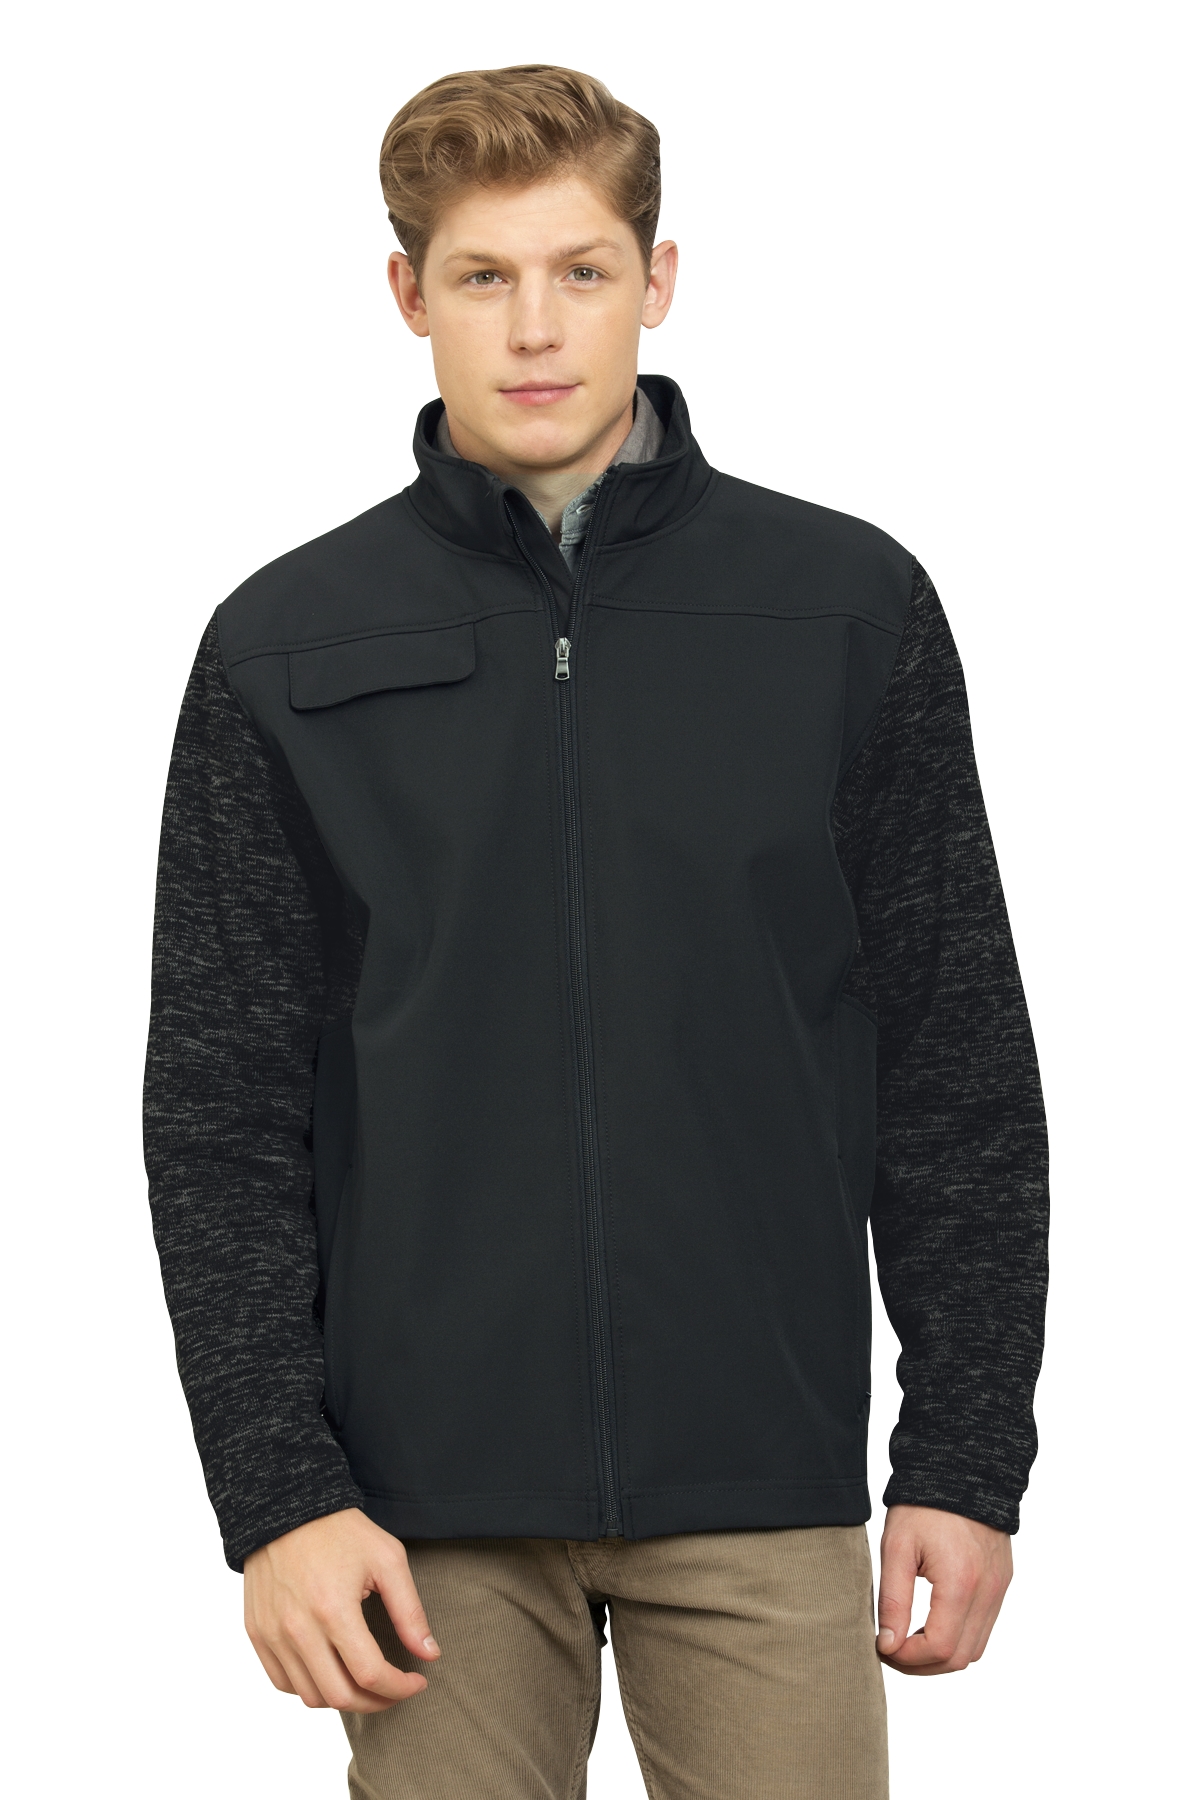 Vantage 7317 - Men's SoHo Jacket $49.34 - Outerwear